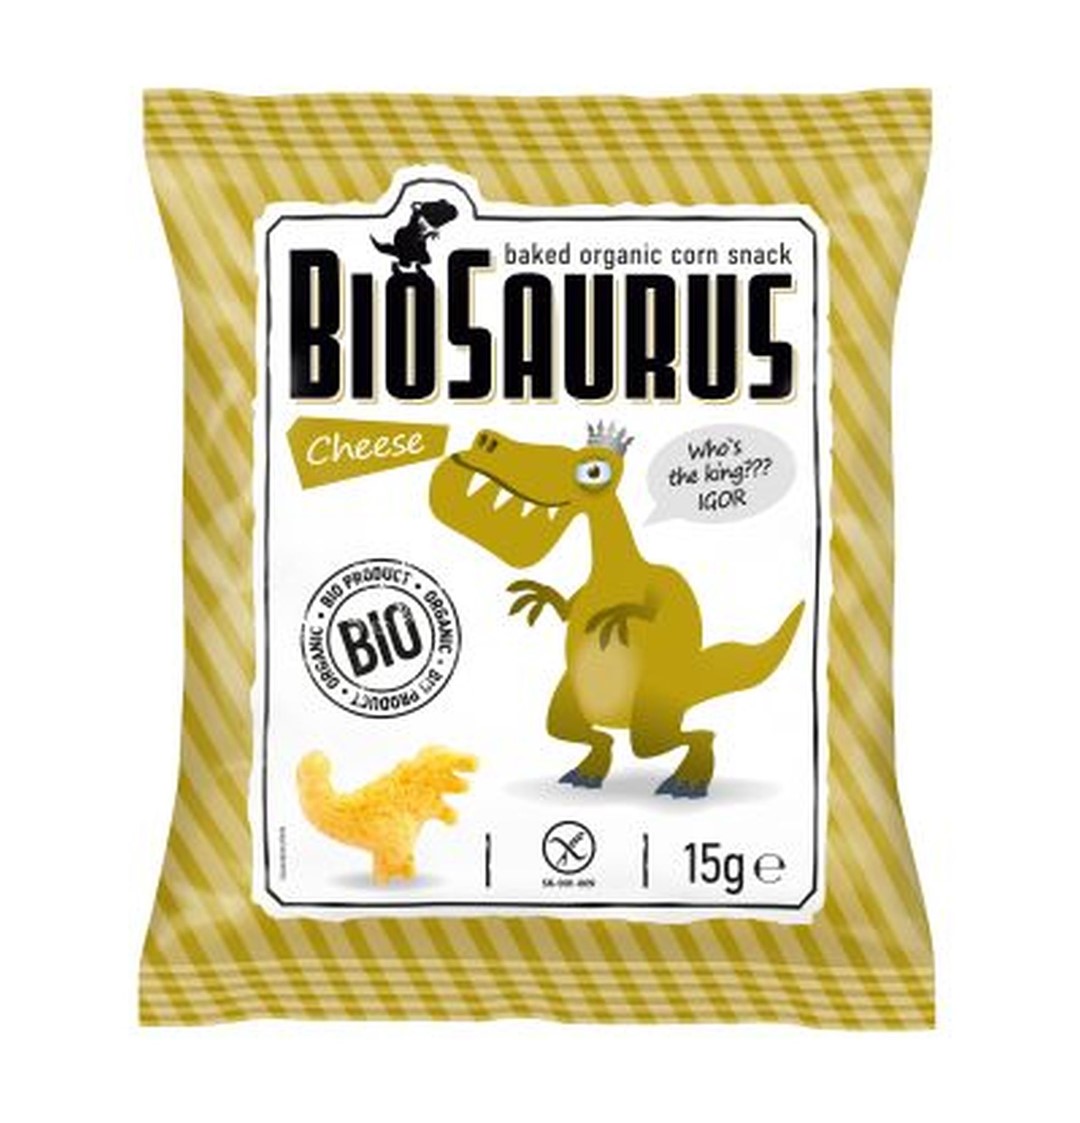 Chrupki kukurydziane Dinozaury o smaku serowym BEZGL. BIO 15 g BioSaurus